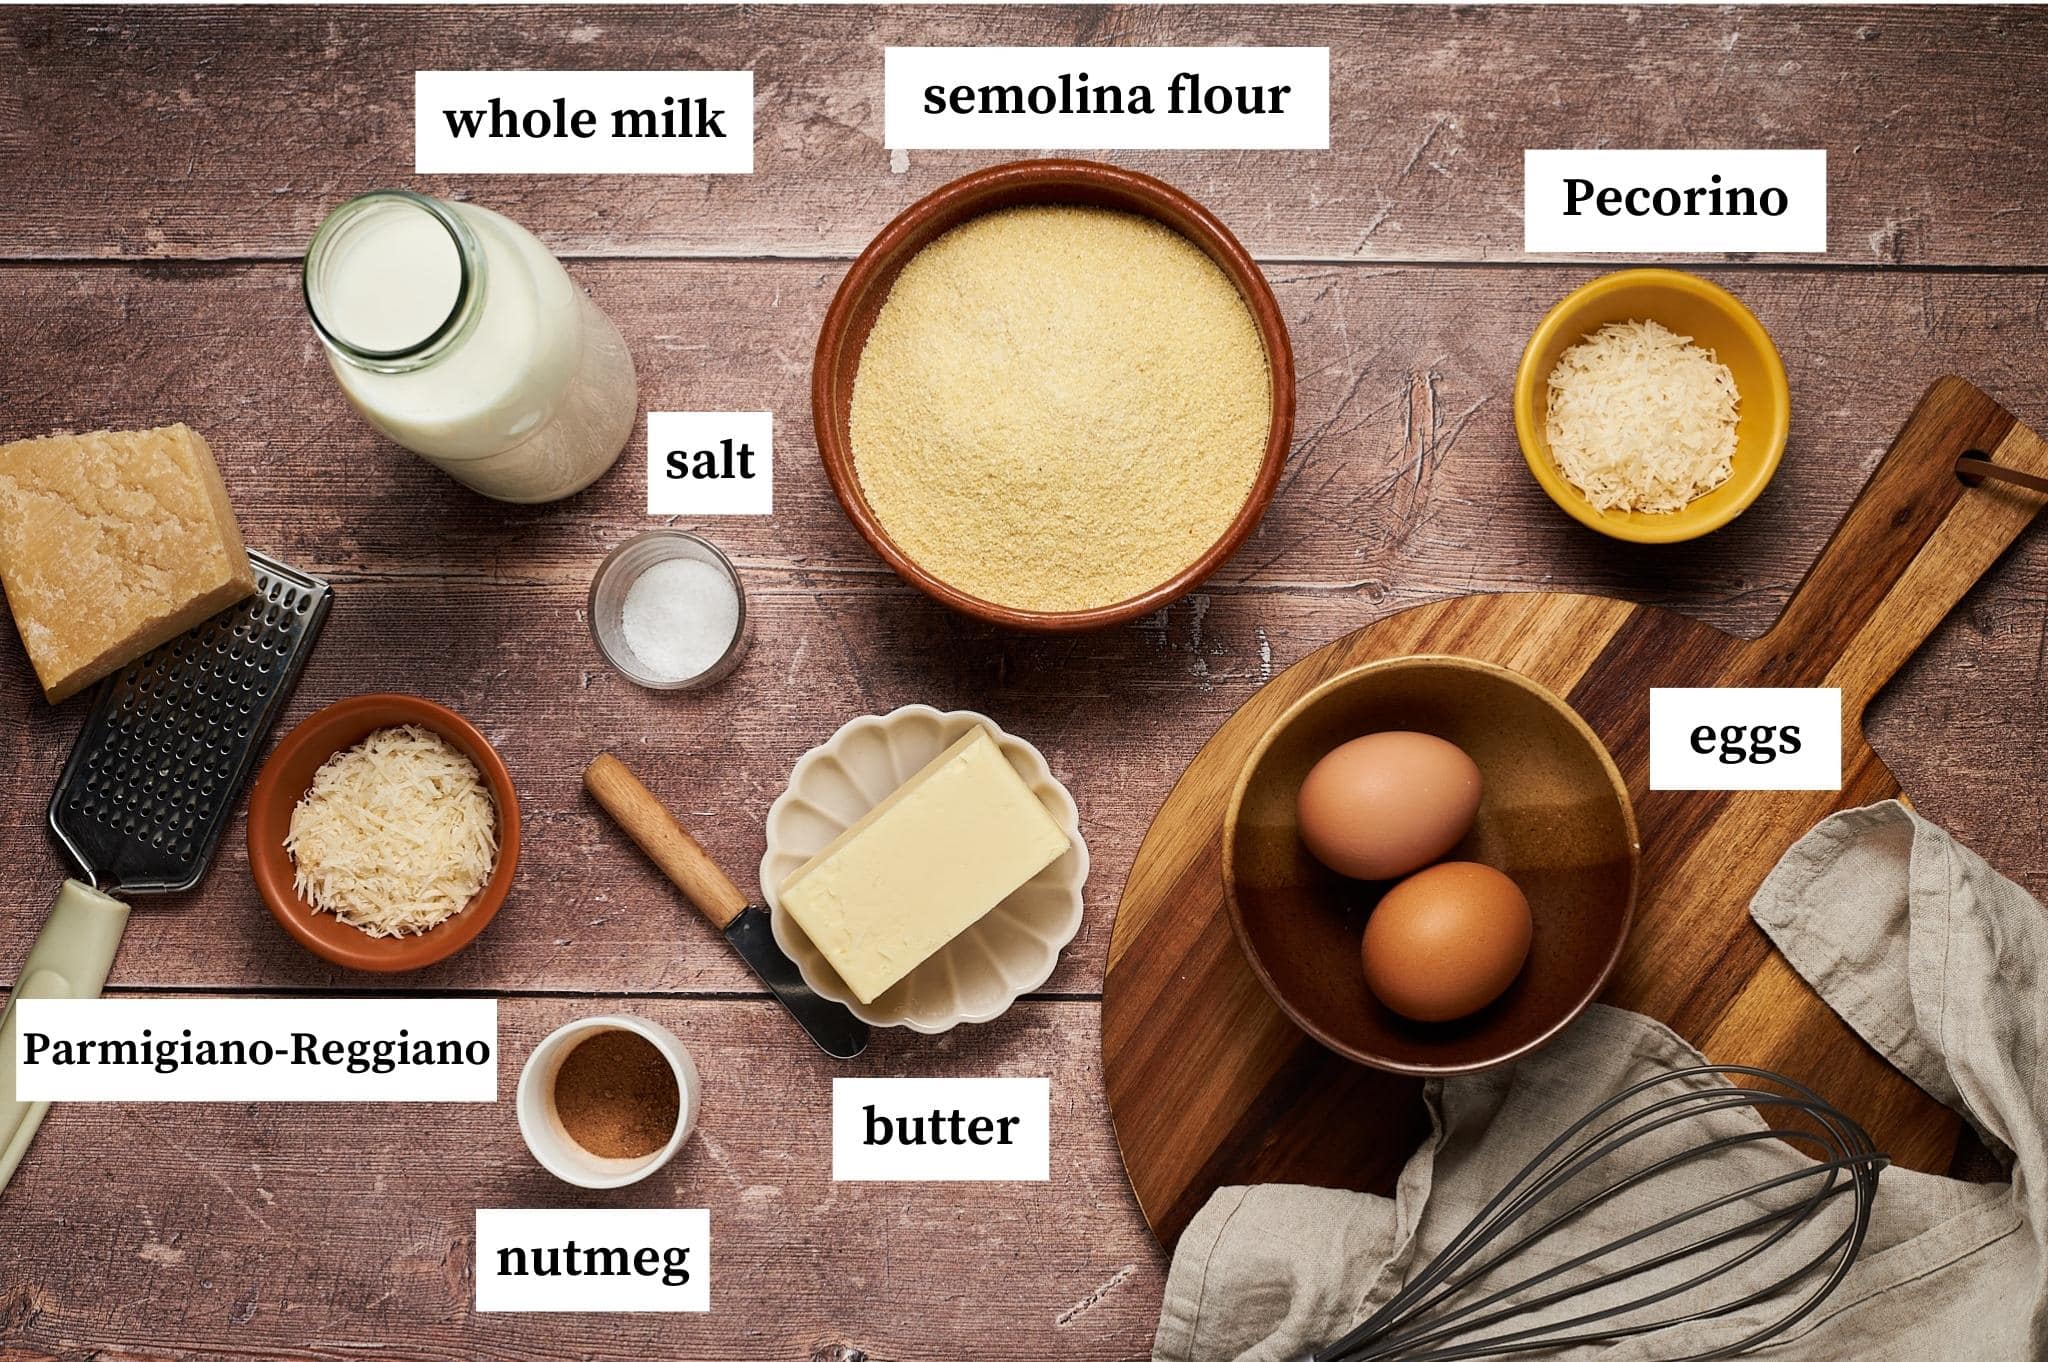 ingredients for gnocchi alla romana displayed on a table: whole milk, semolina flour, pecorino cheese, parmigiano reggiano cheese, eggs, nutmeg, butter.